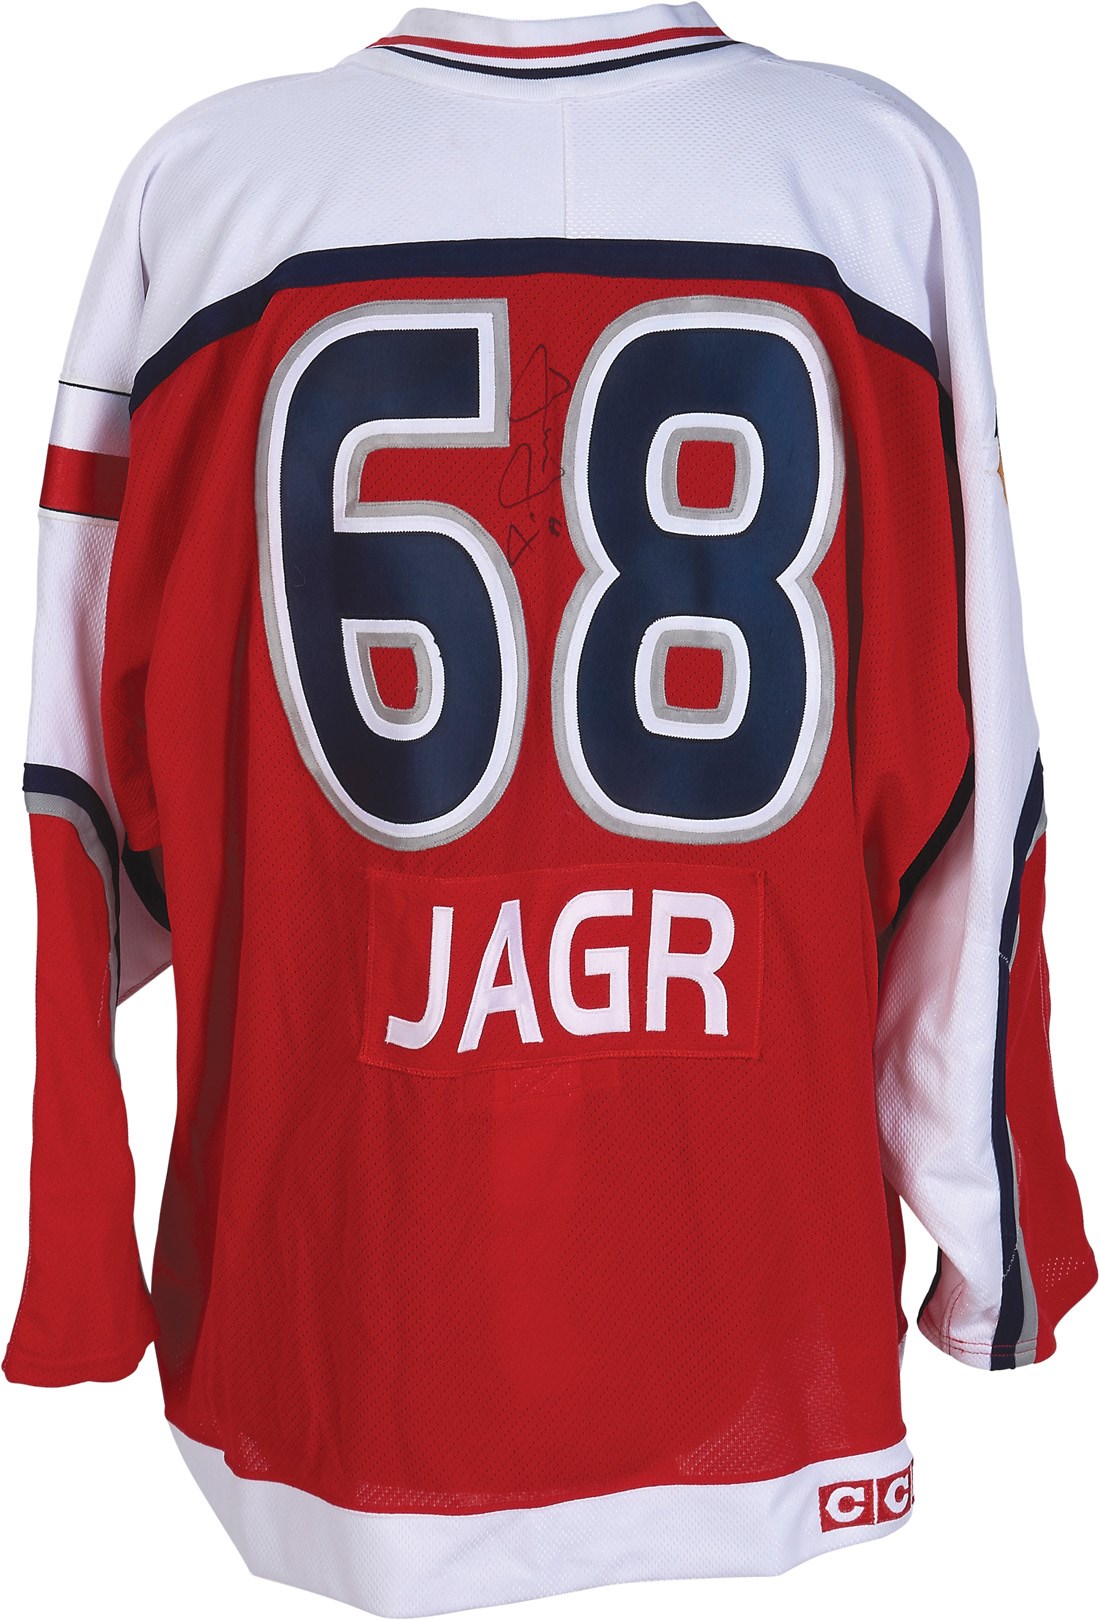 - 1999-2000 Jaromir Jagr All-Star Game Worn Uniform and Helmet